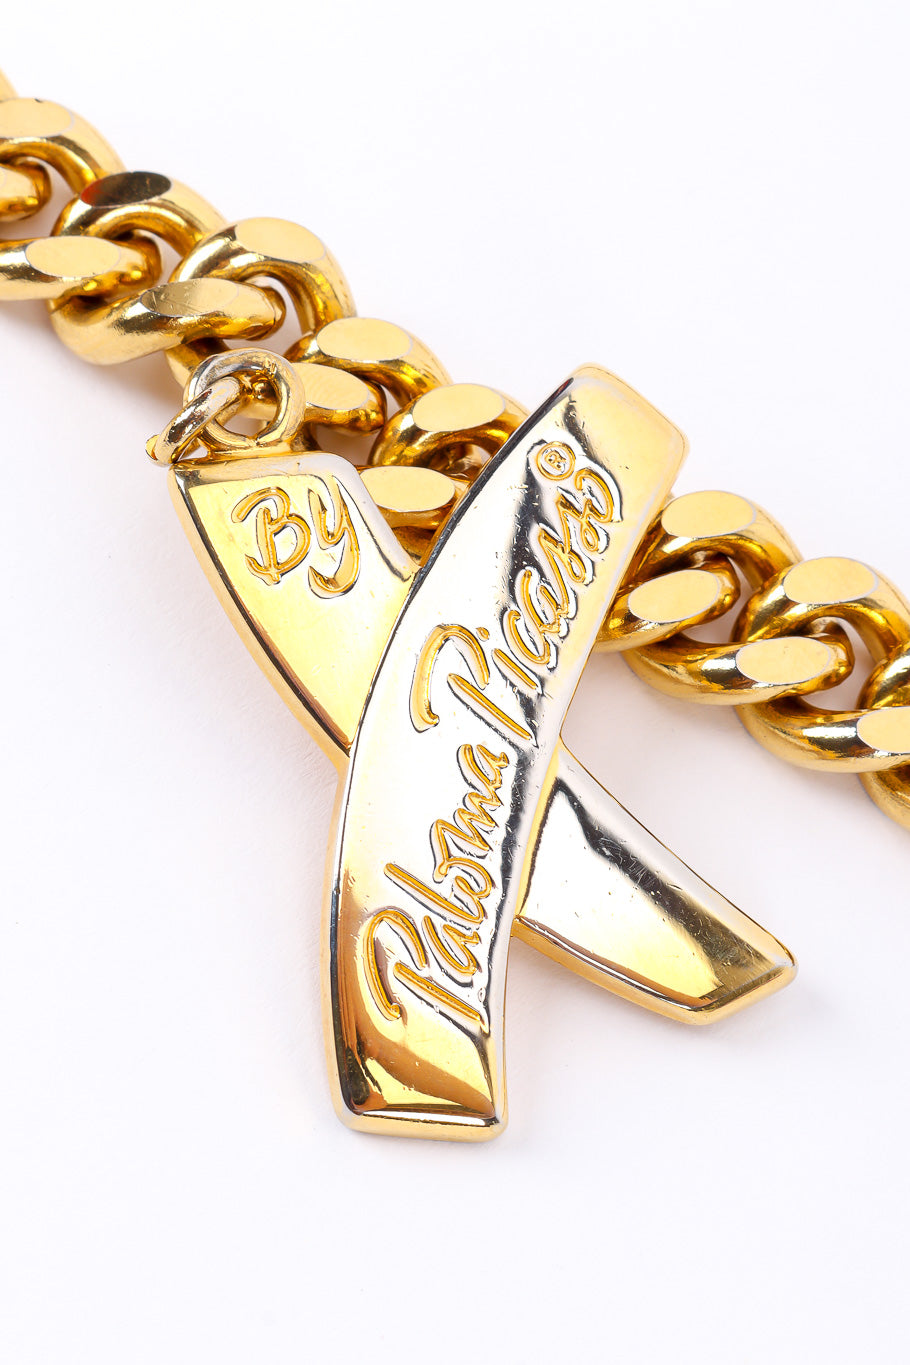 XOXO charm belt by Paloma Picasso on white background signed X logo charm @recessla